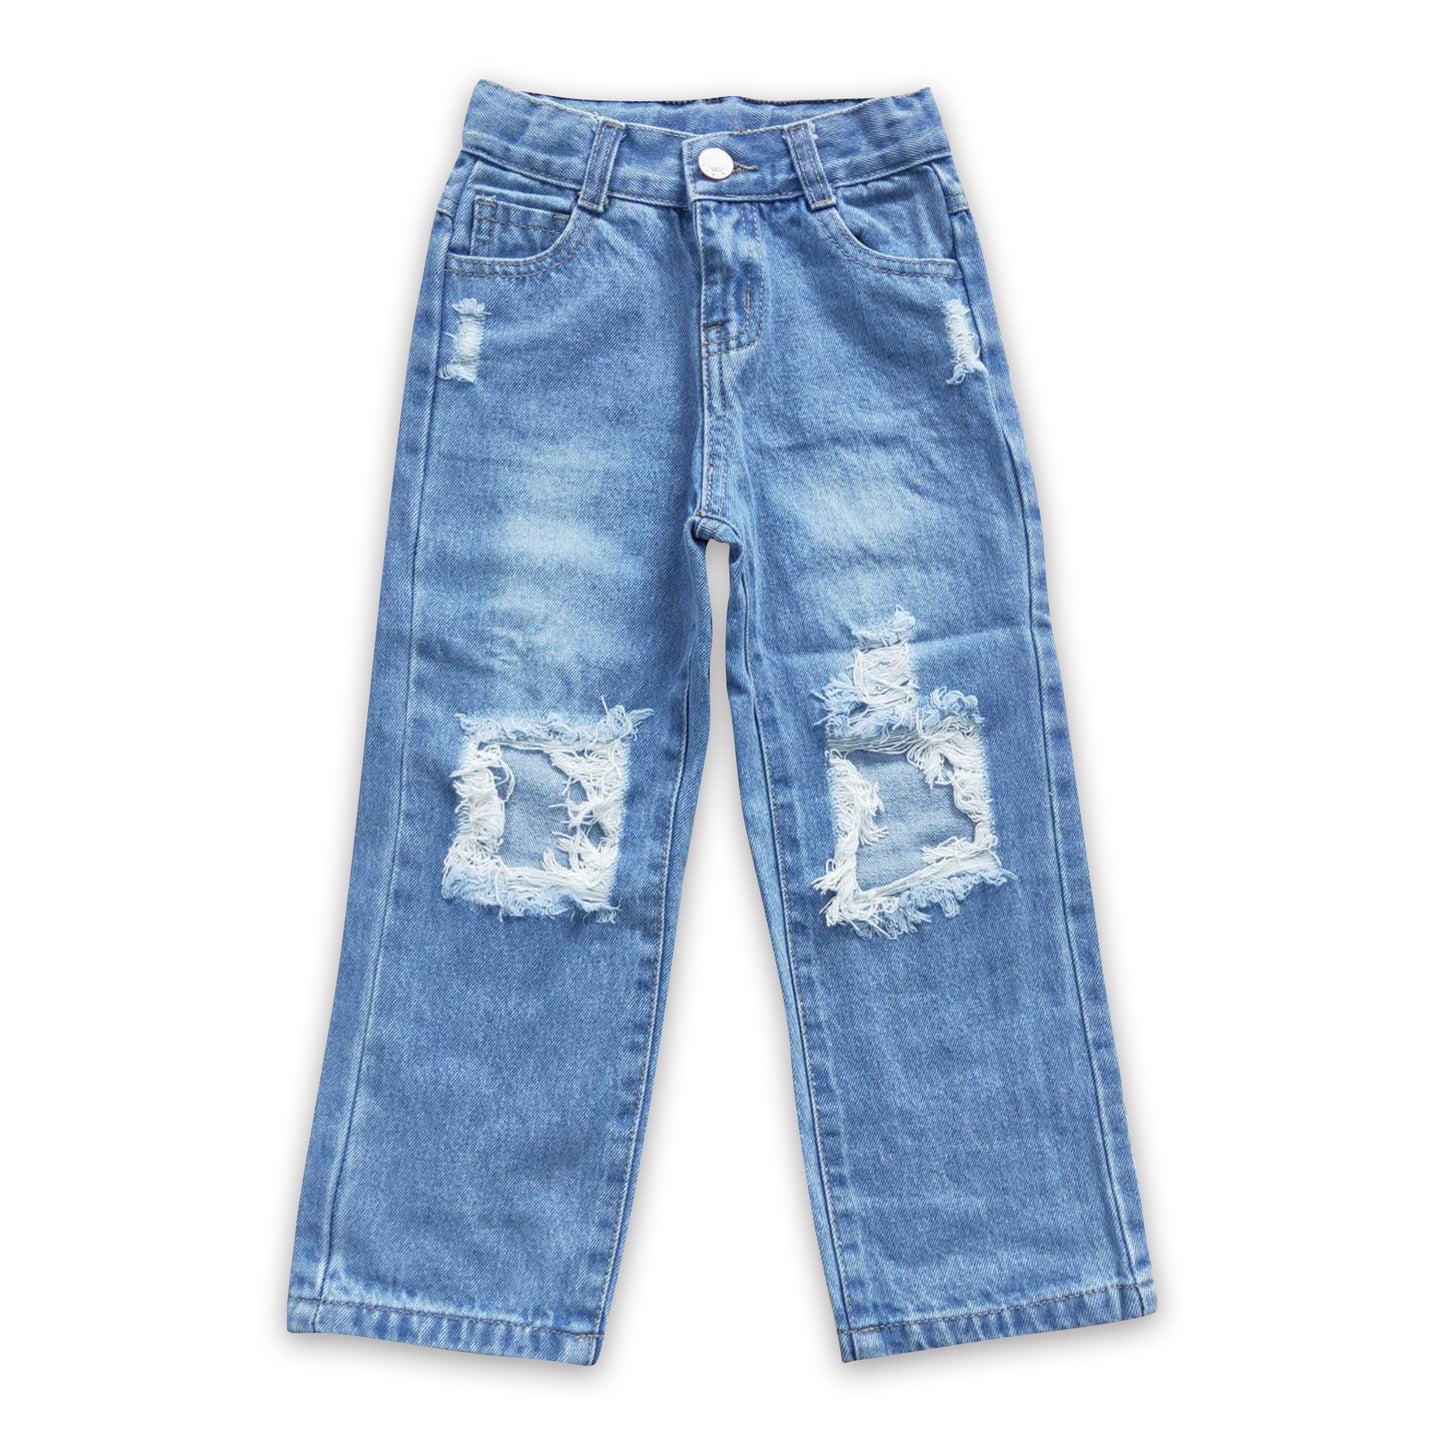 Hole boy denim pants – Yawoo Garments